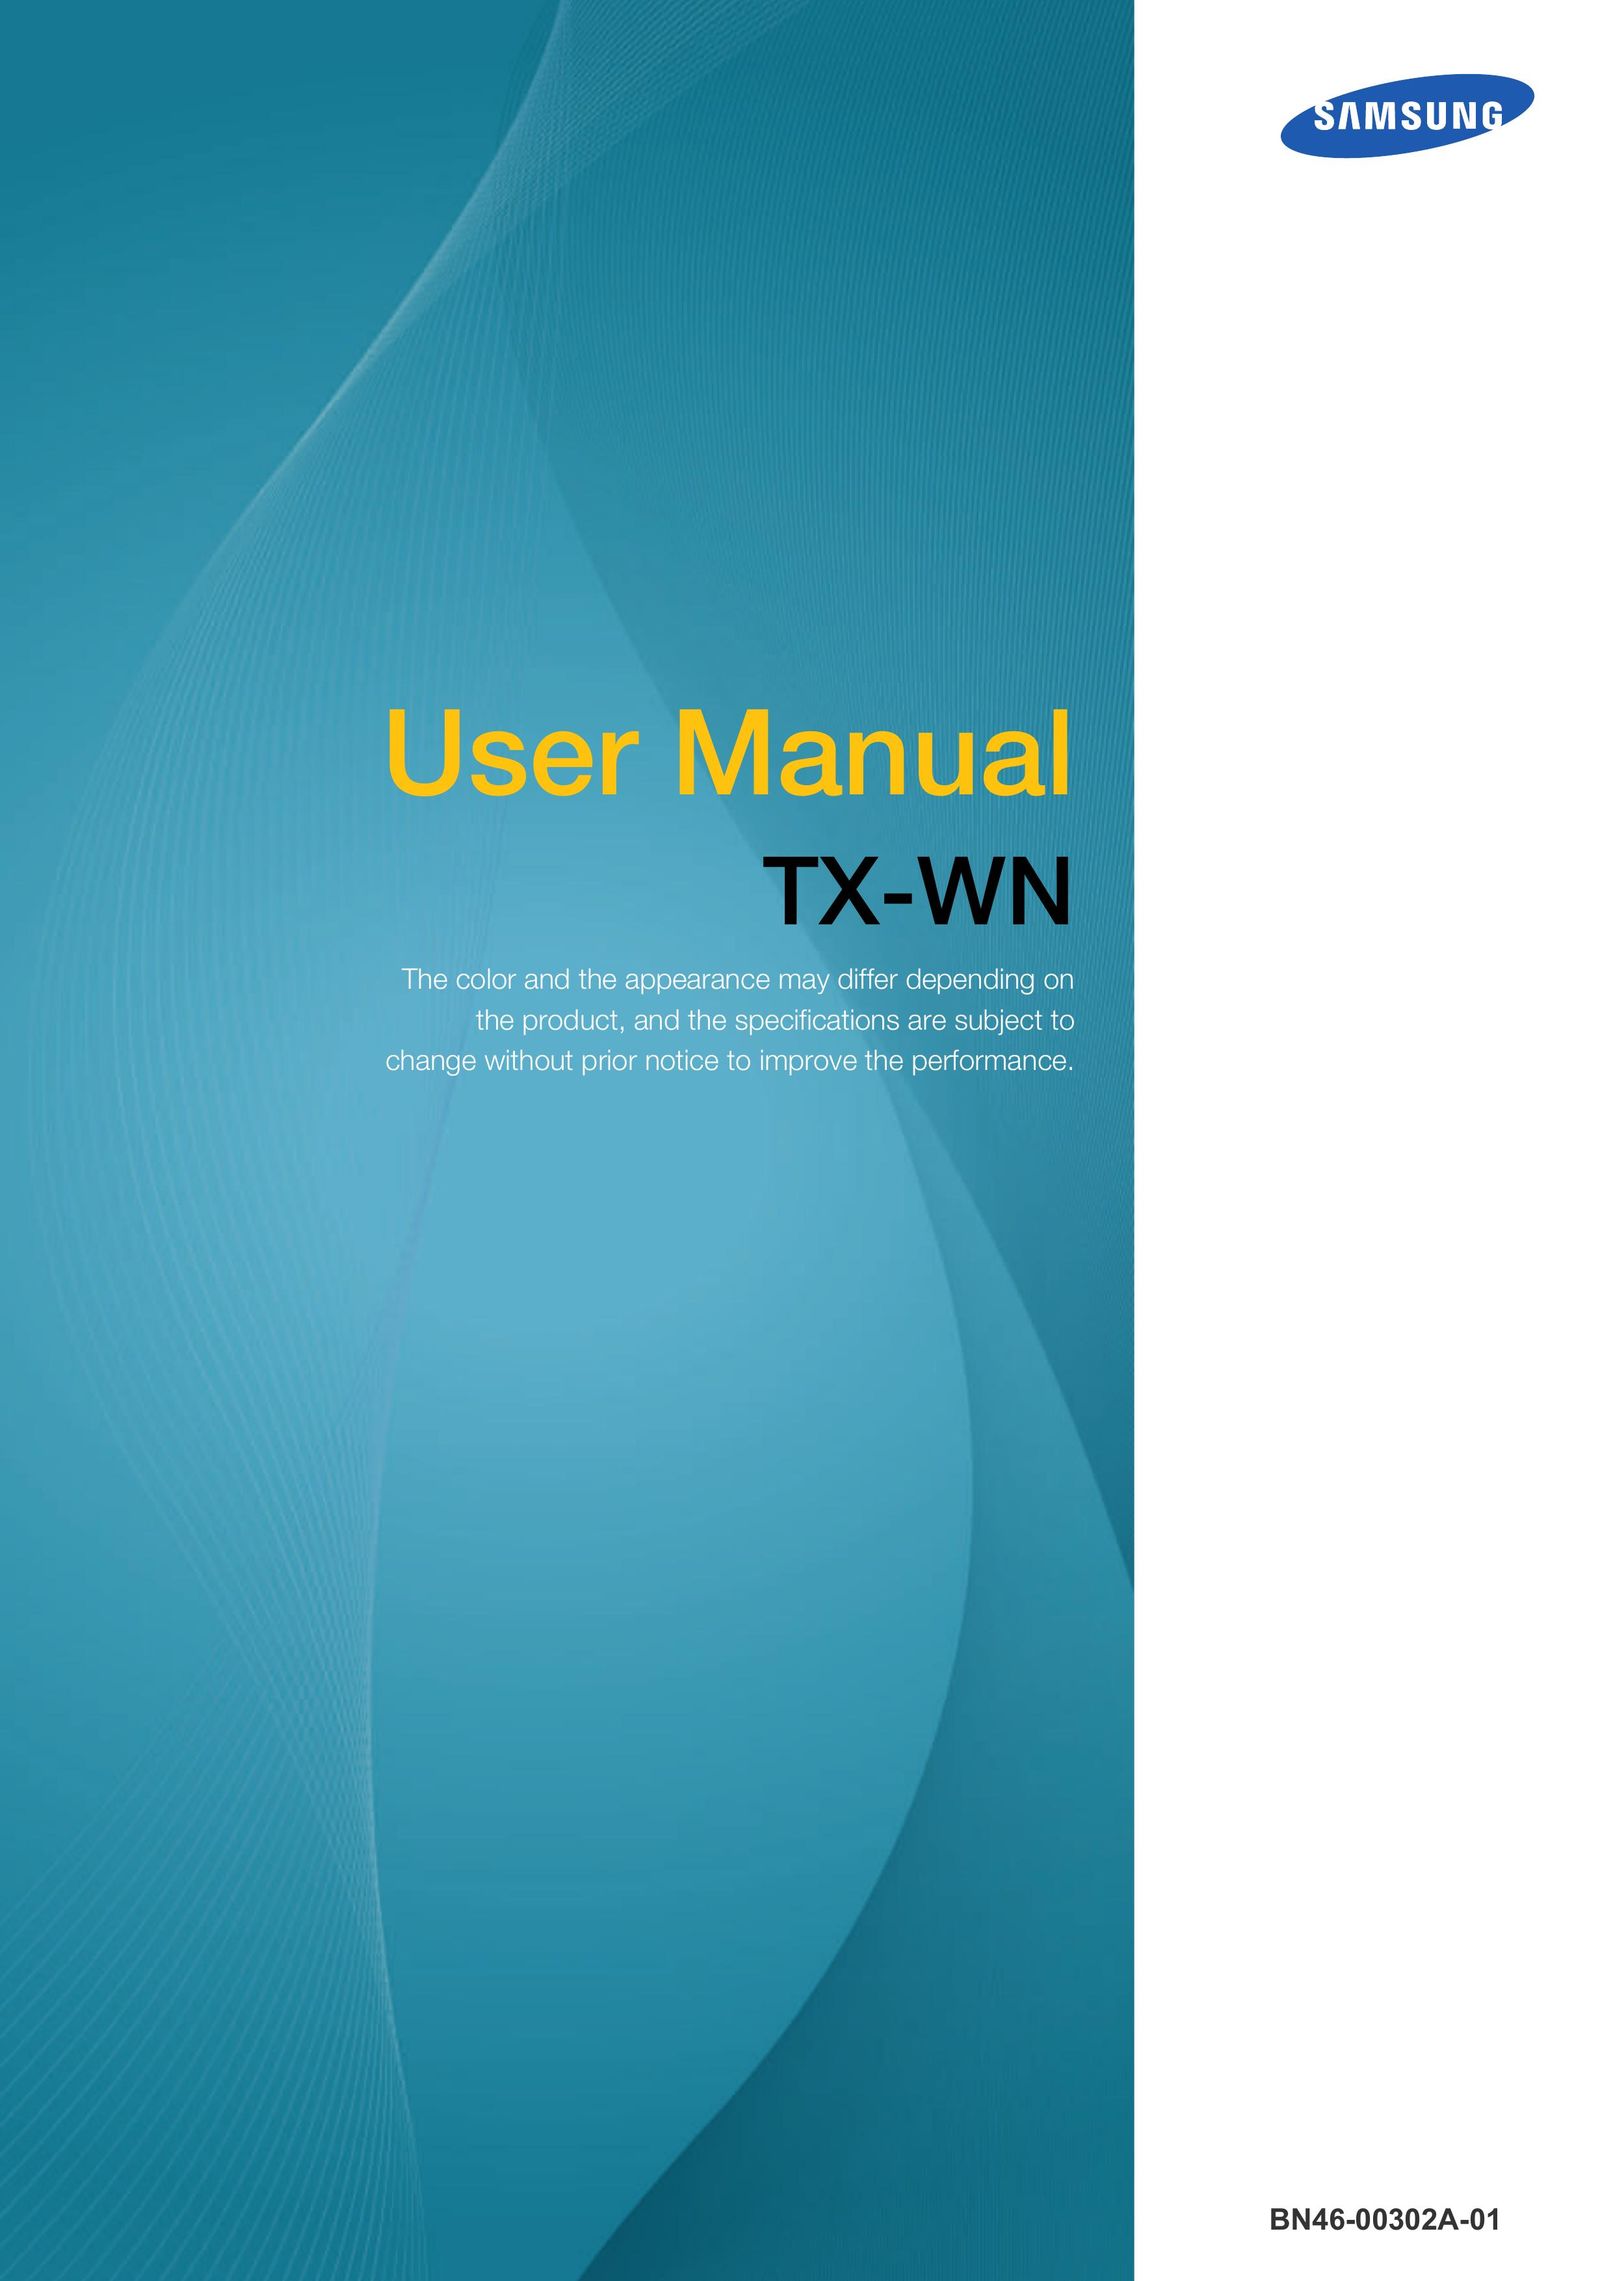 Samsung TX-WN Personal Computer User Manual